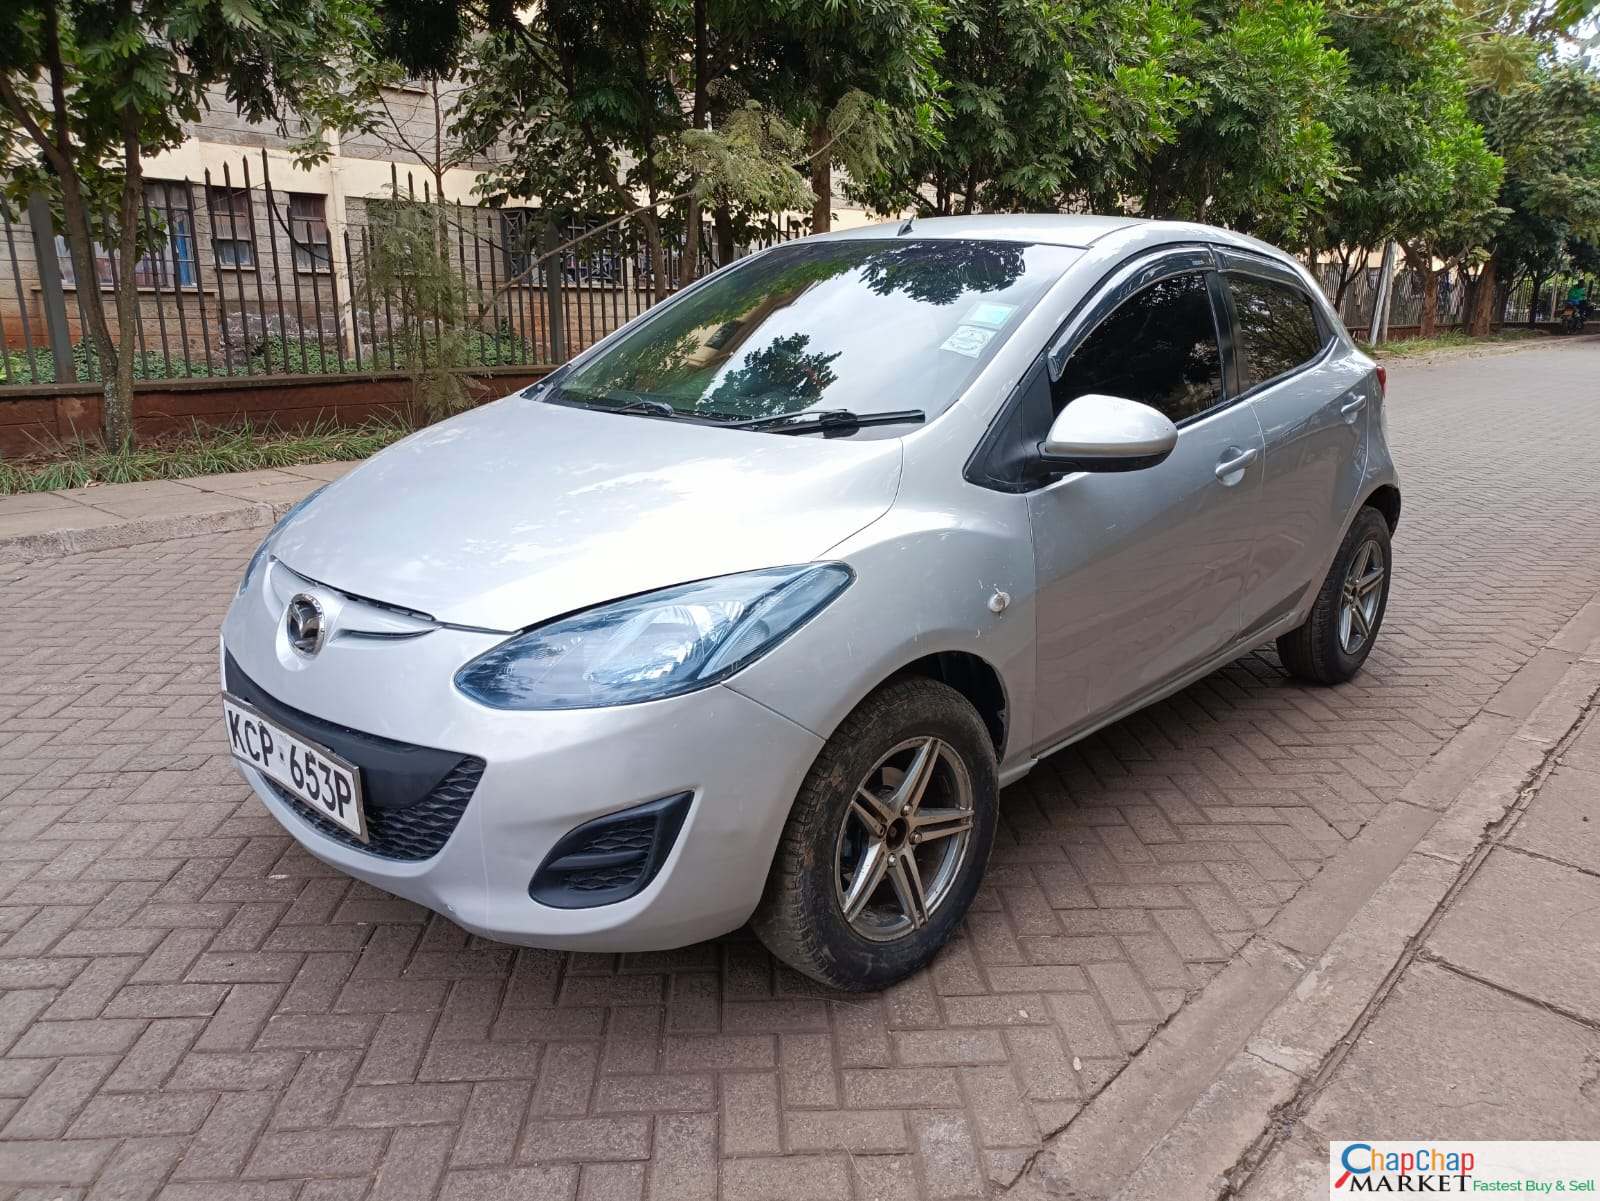 Mazda Demio for sale in Kenya ðŸ”¥ You Pay 30% DEPOSIT TRADE IN OK EXCLUSIVE